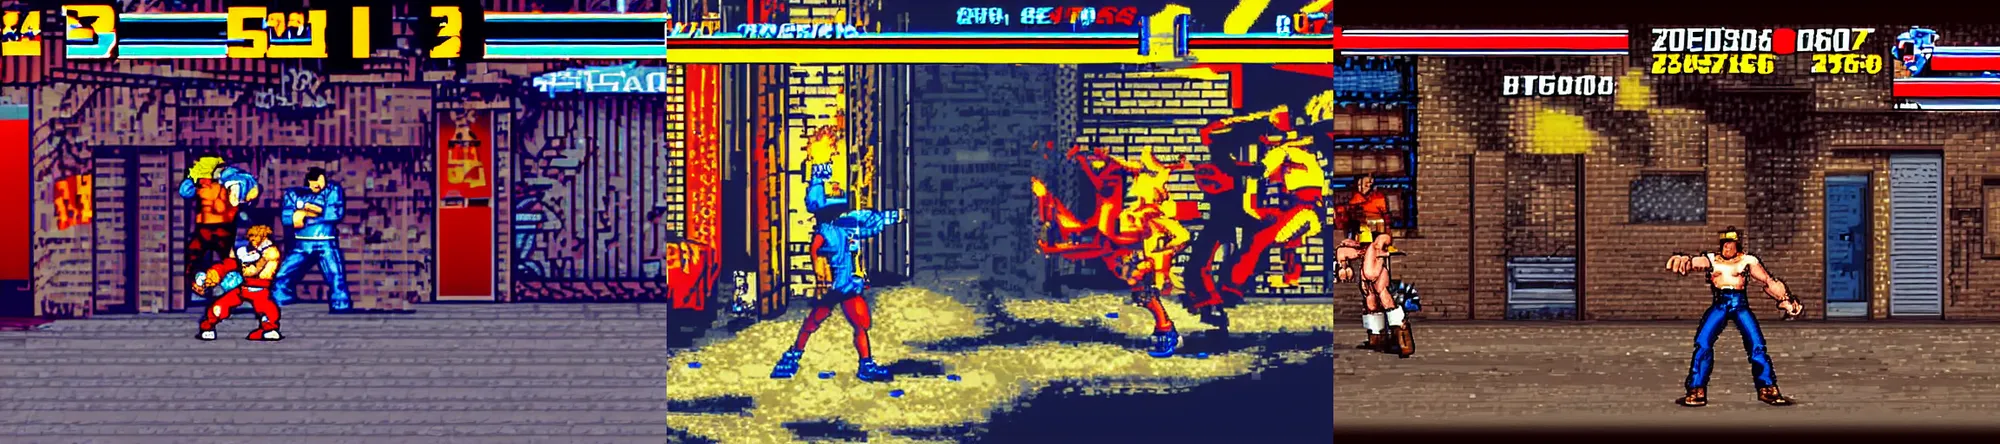 Prompt: blaze fielding in streets of rage arcade game, screenshot, dirty alleyway